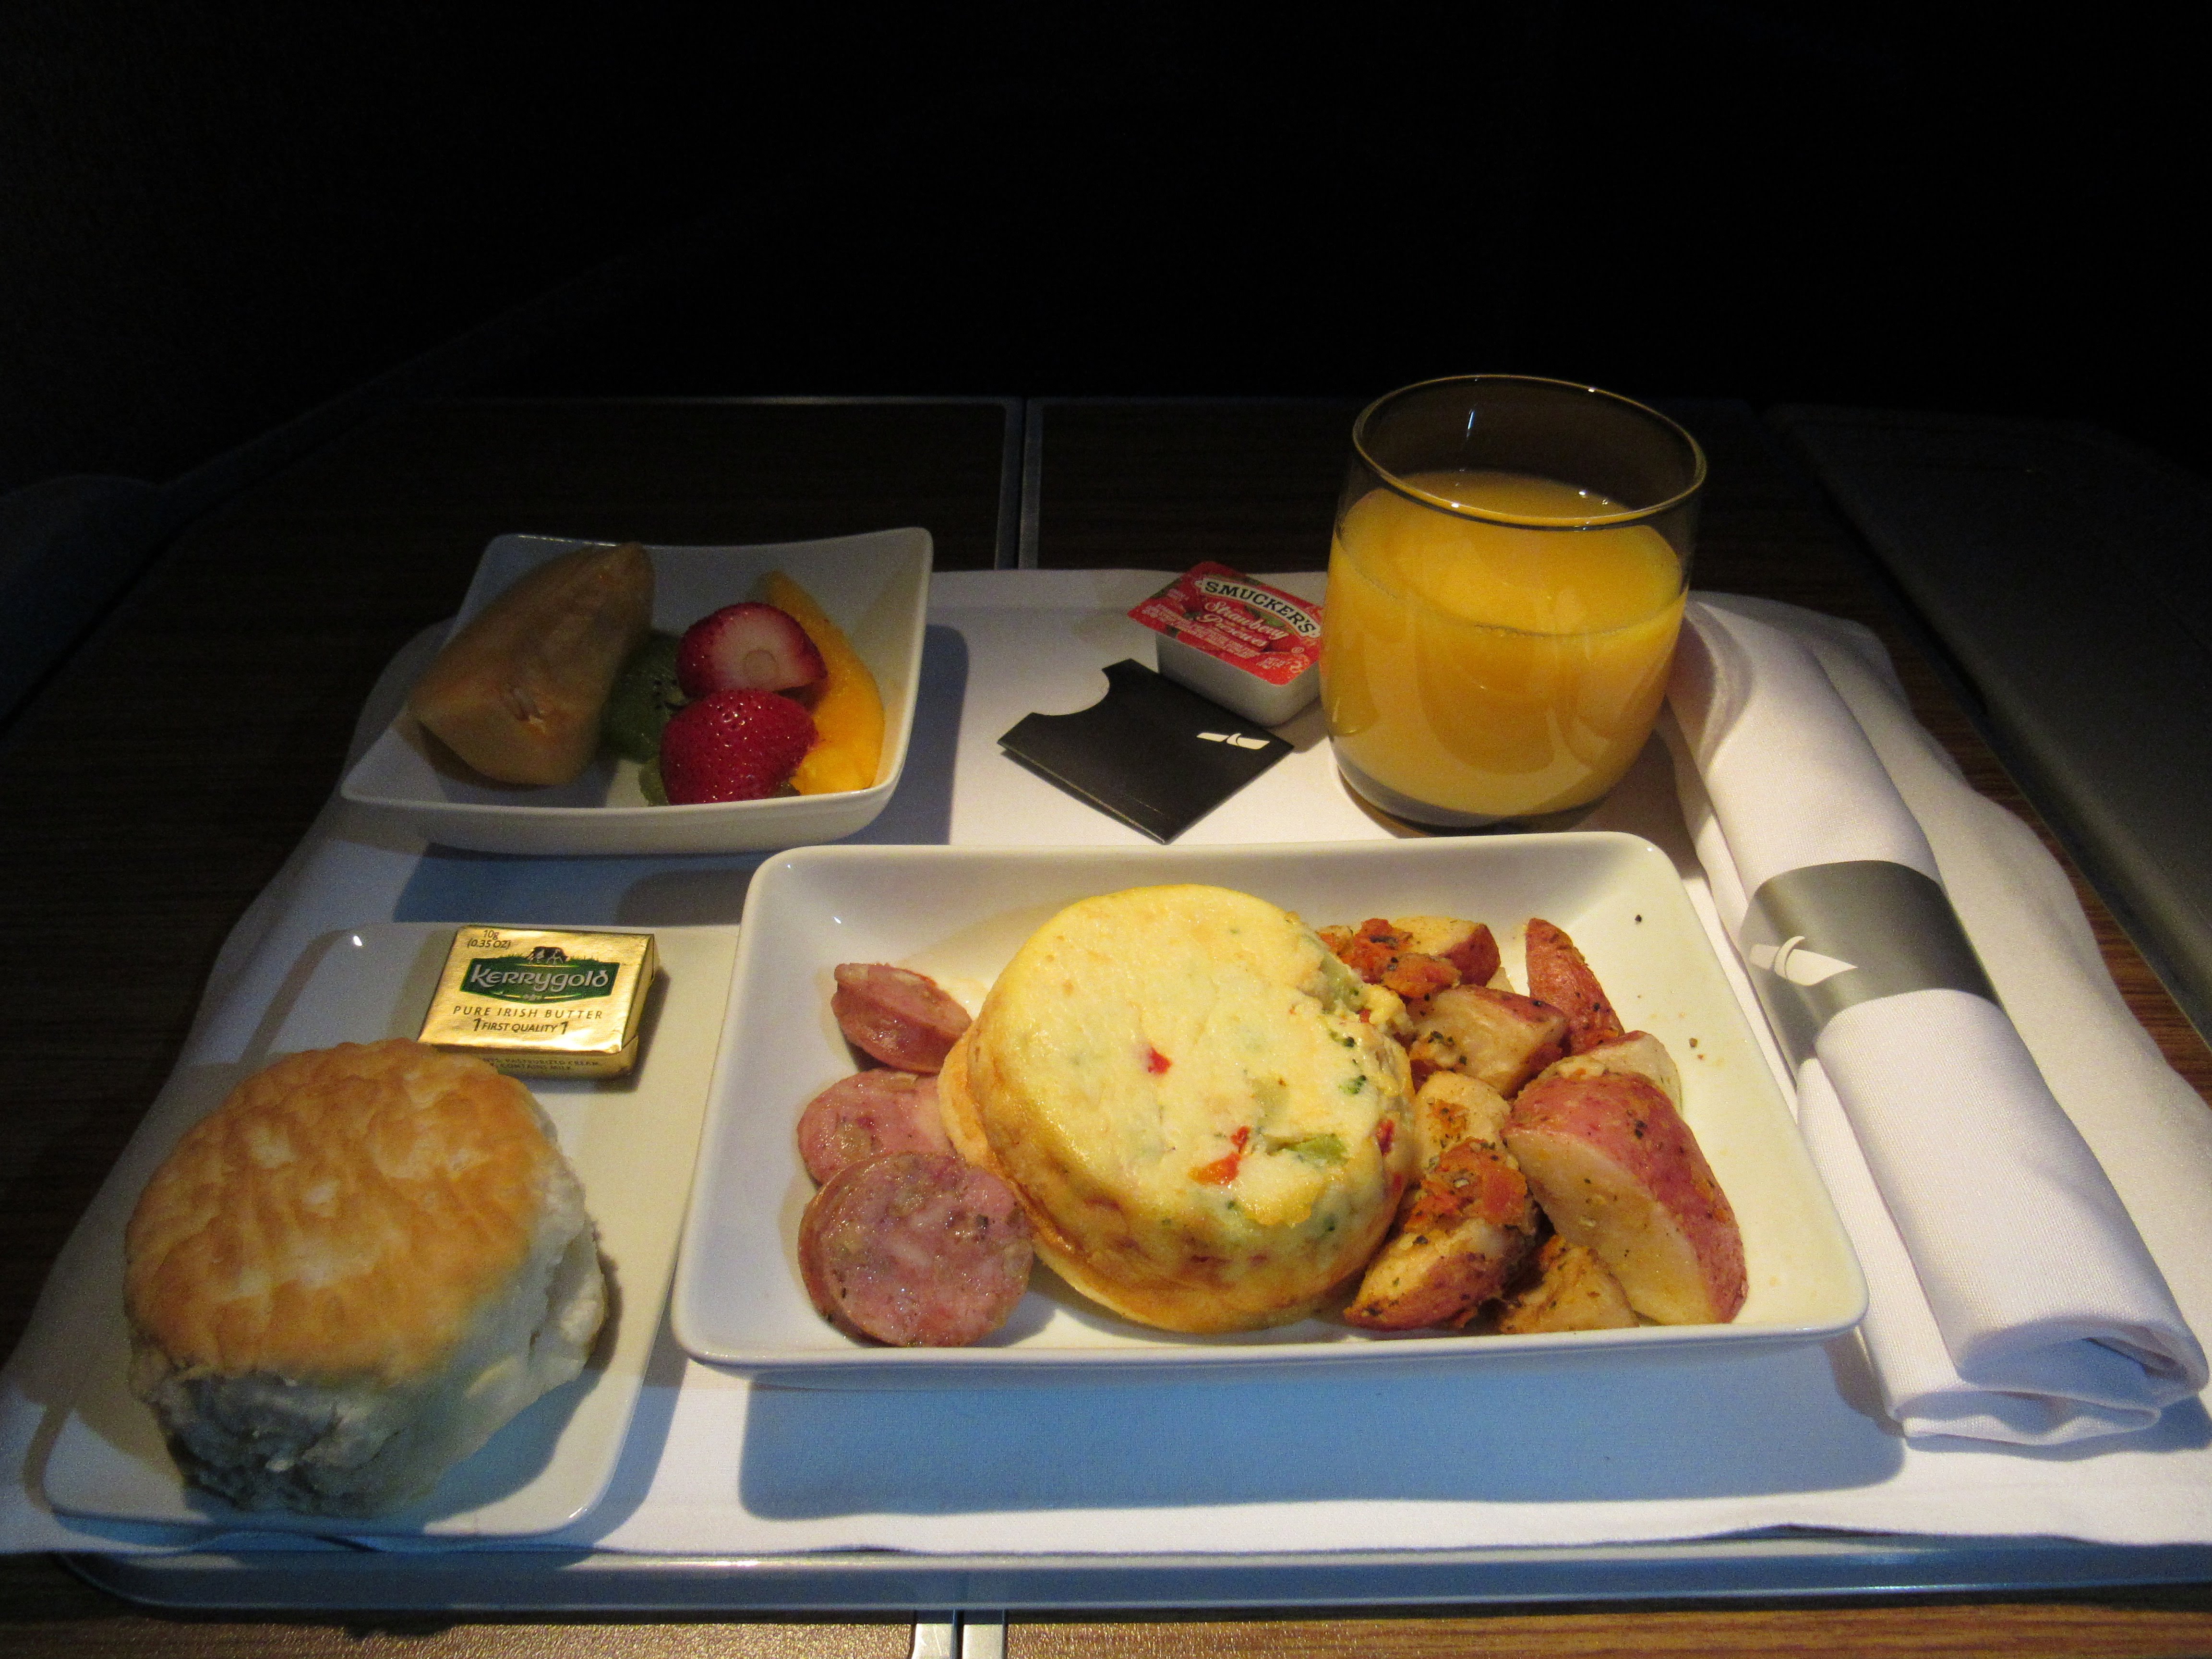 Breakfast on American Airlines